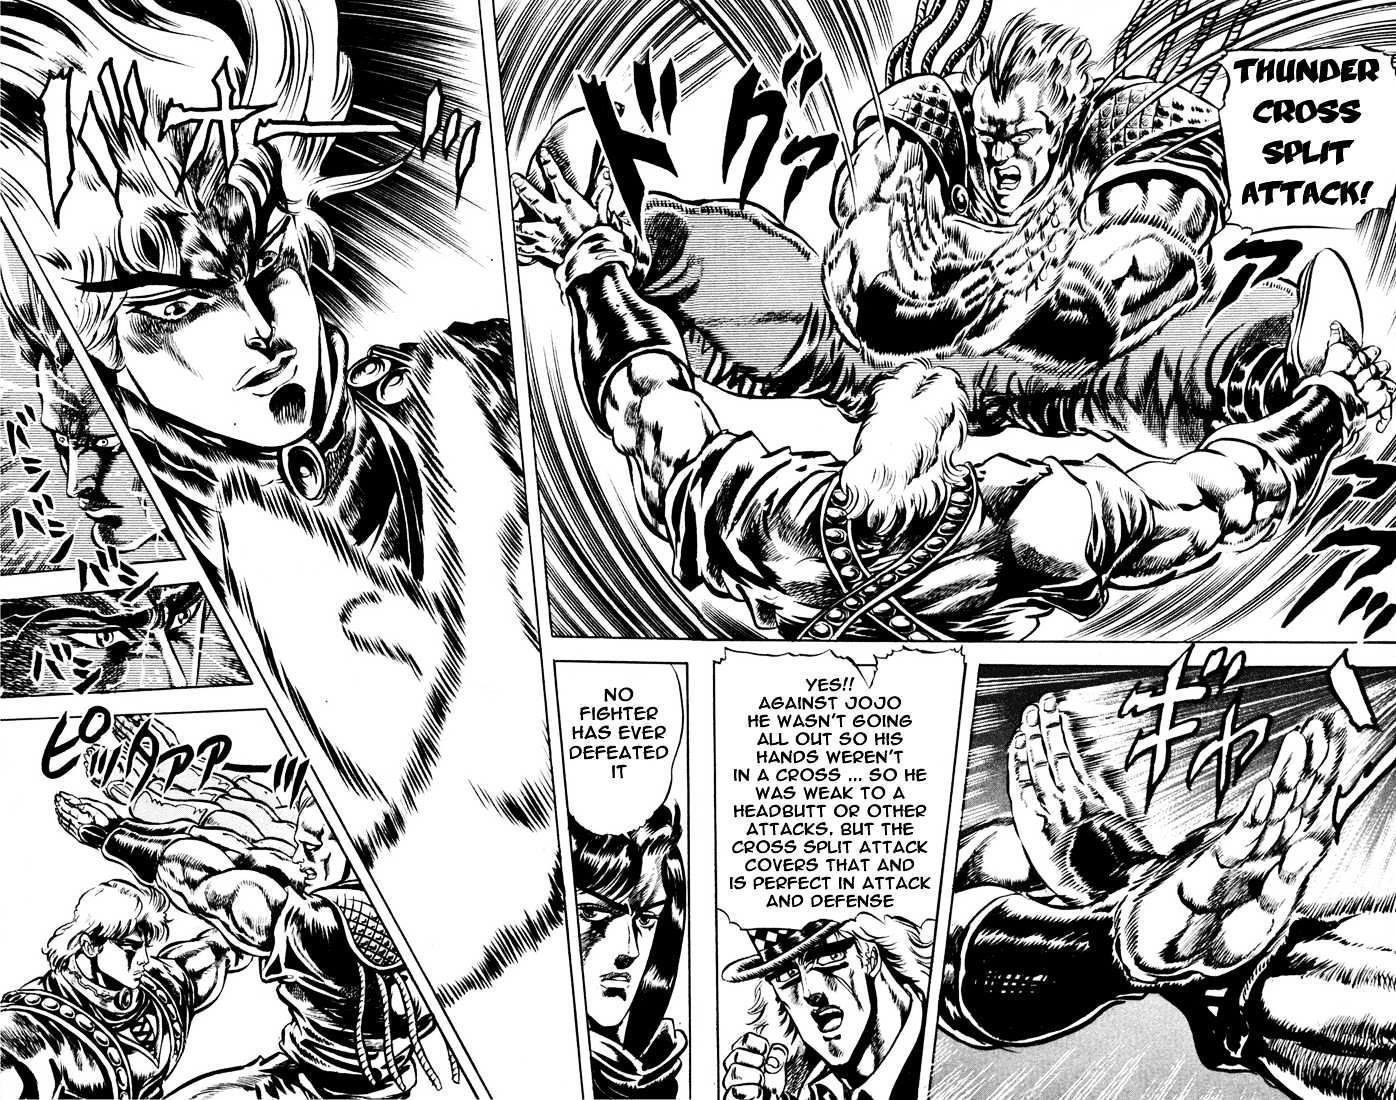 Jojo's Bizarre Adventure Vol.5 Chapter 38 : Thunder Cross Split Attack page 12 - 